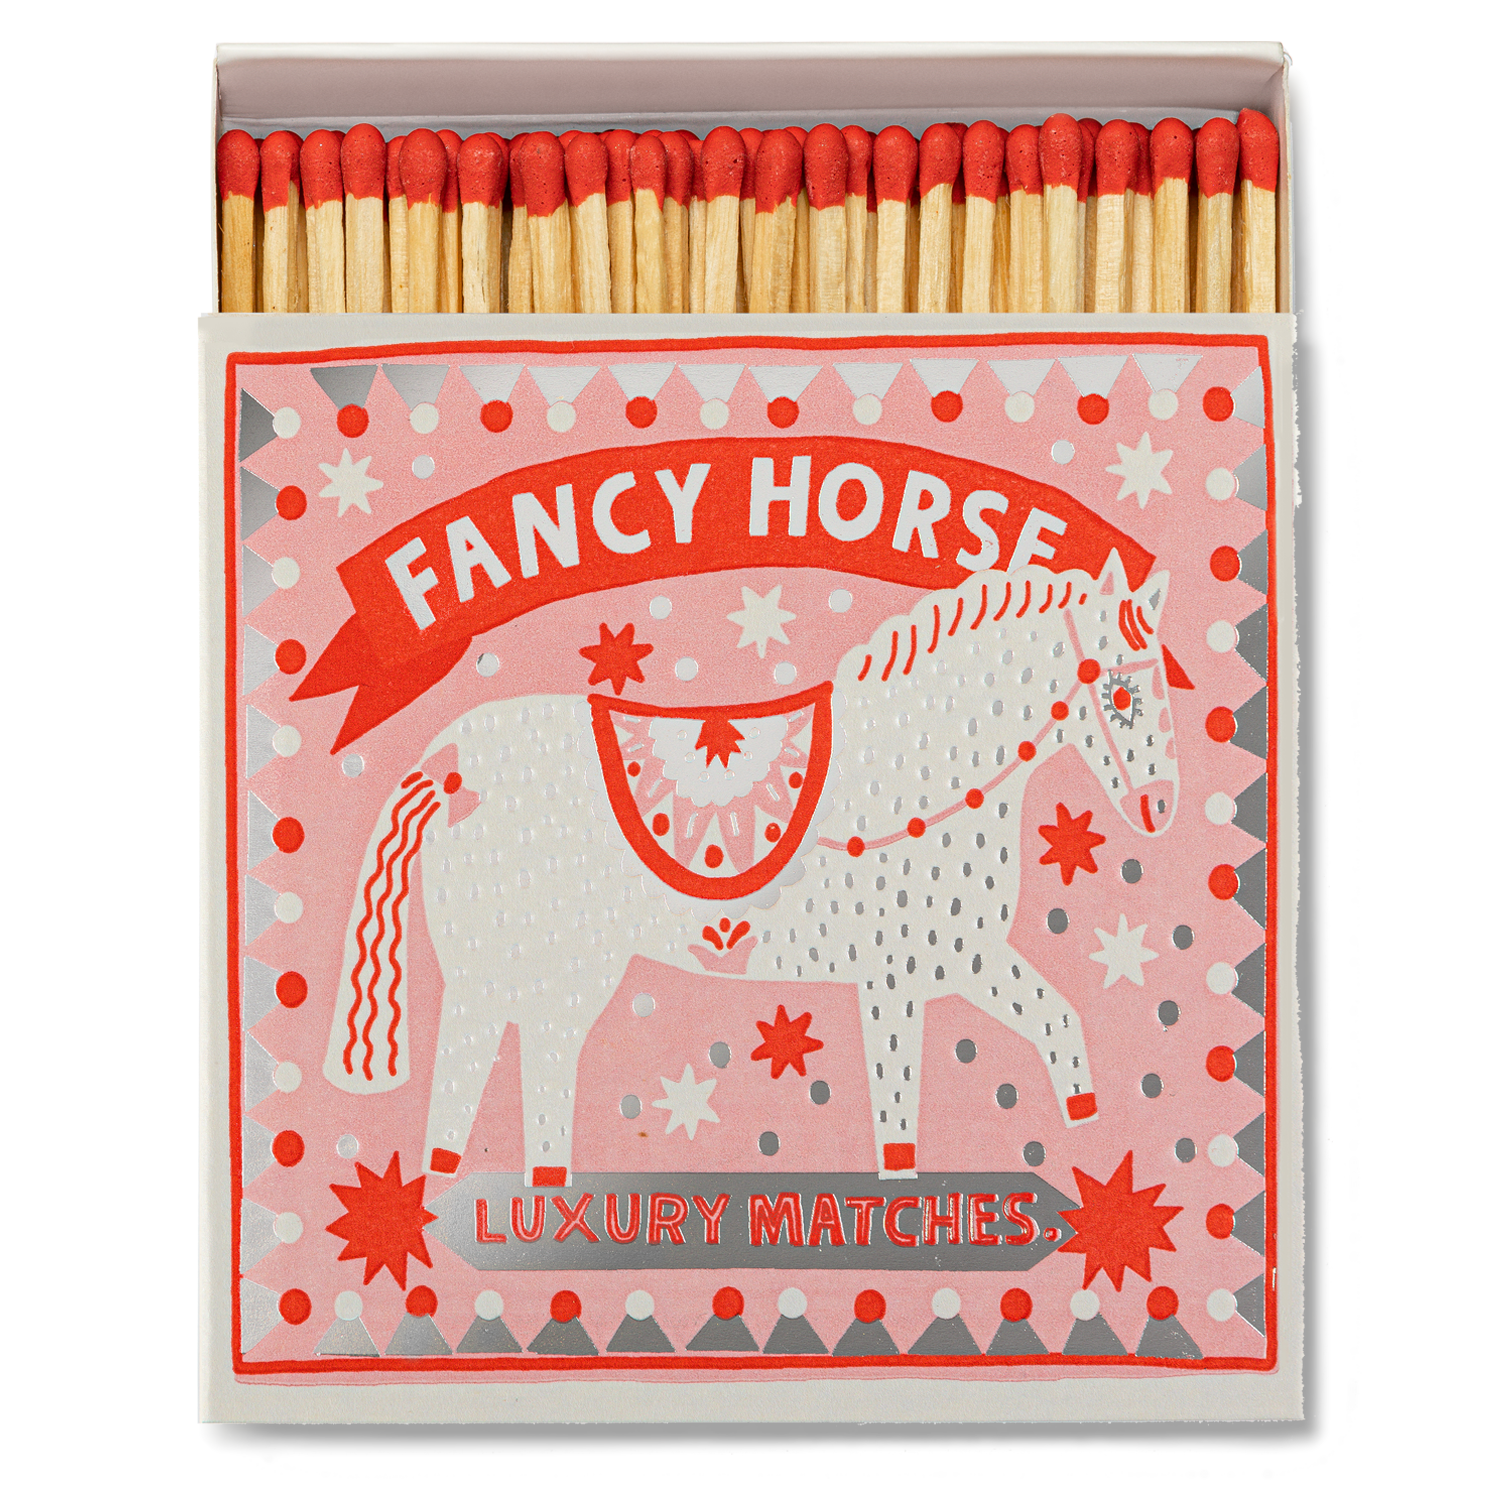 Archivist Luxury Matches - Fancy Horse